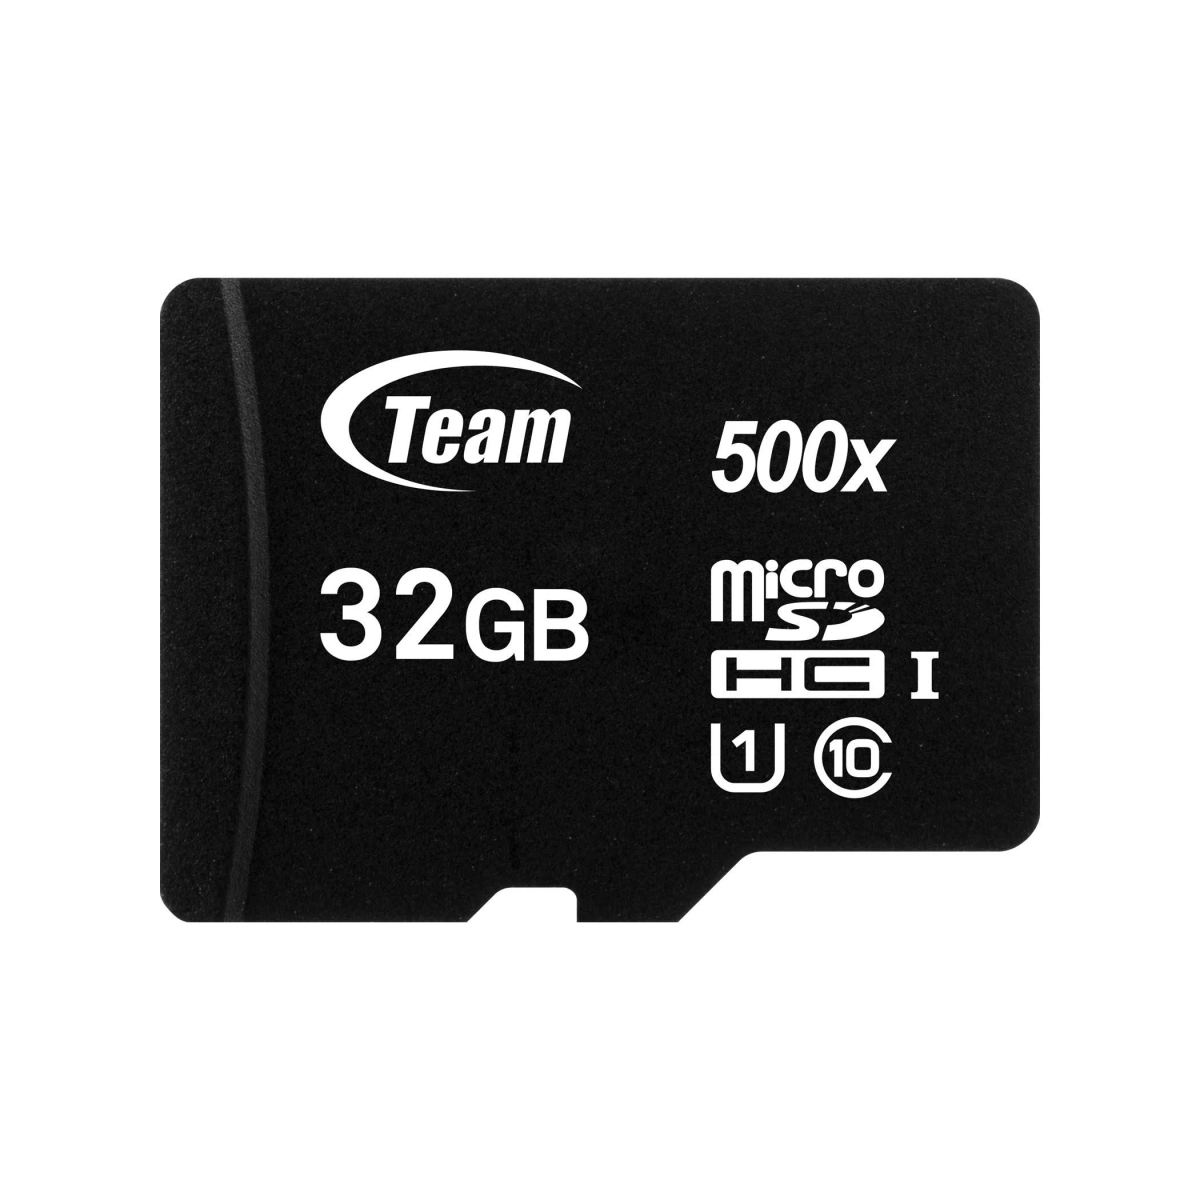 GB, Micro-SDHC, SD Micro-SDXC, 15 32 SDHC, TUSDH32GCL10U03, GROUP MB/s TEAM Micro-SD, Speicherkarte,